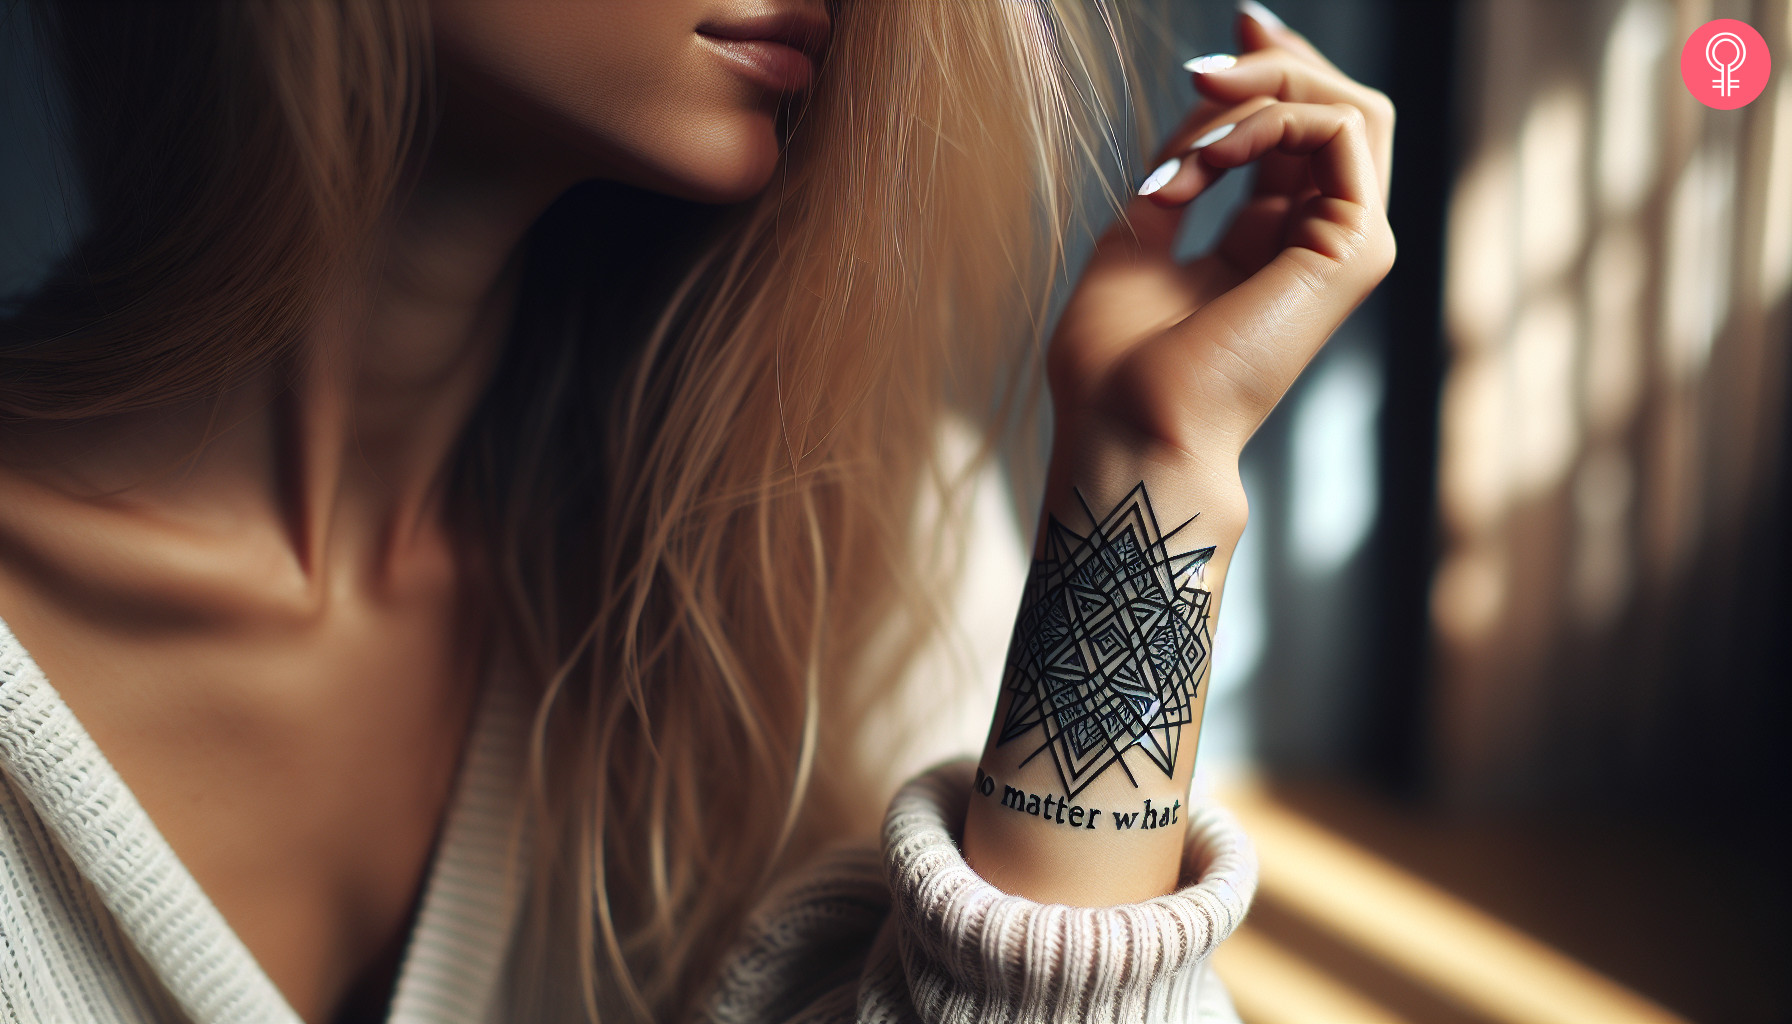 Geometric ‘no matter what’ tattoo on the wrist of a woman